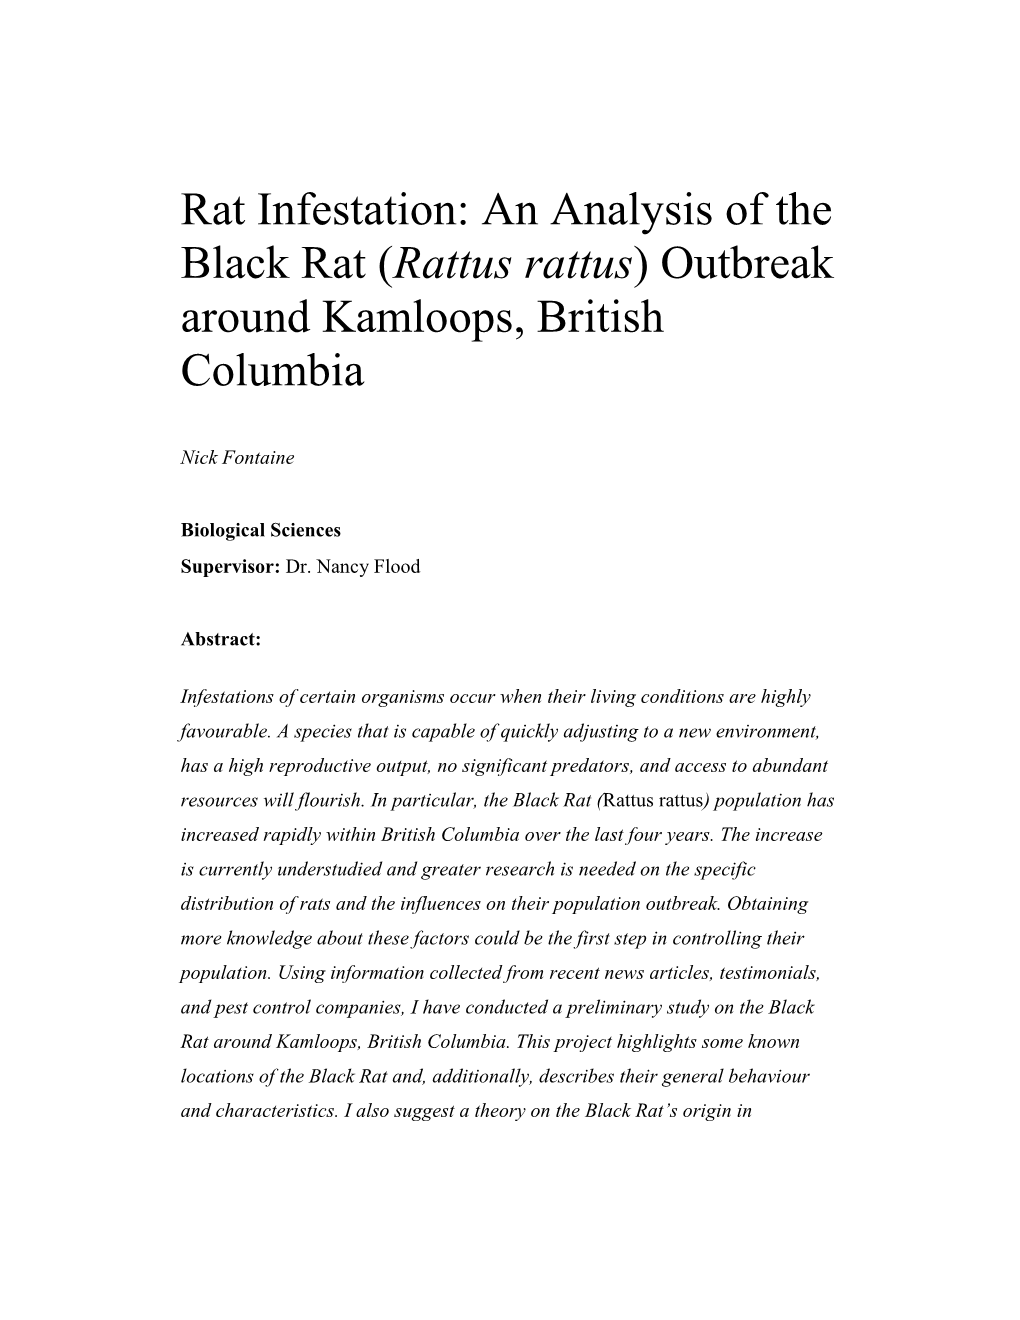 Rat Infestation: an Analysis of the Black Rat (Rattus Rattus) Outbreak Around Kamloops, British Columbia